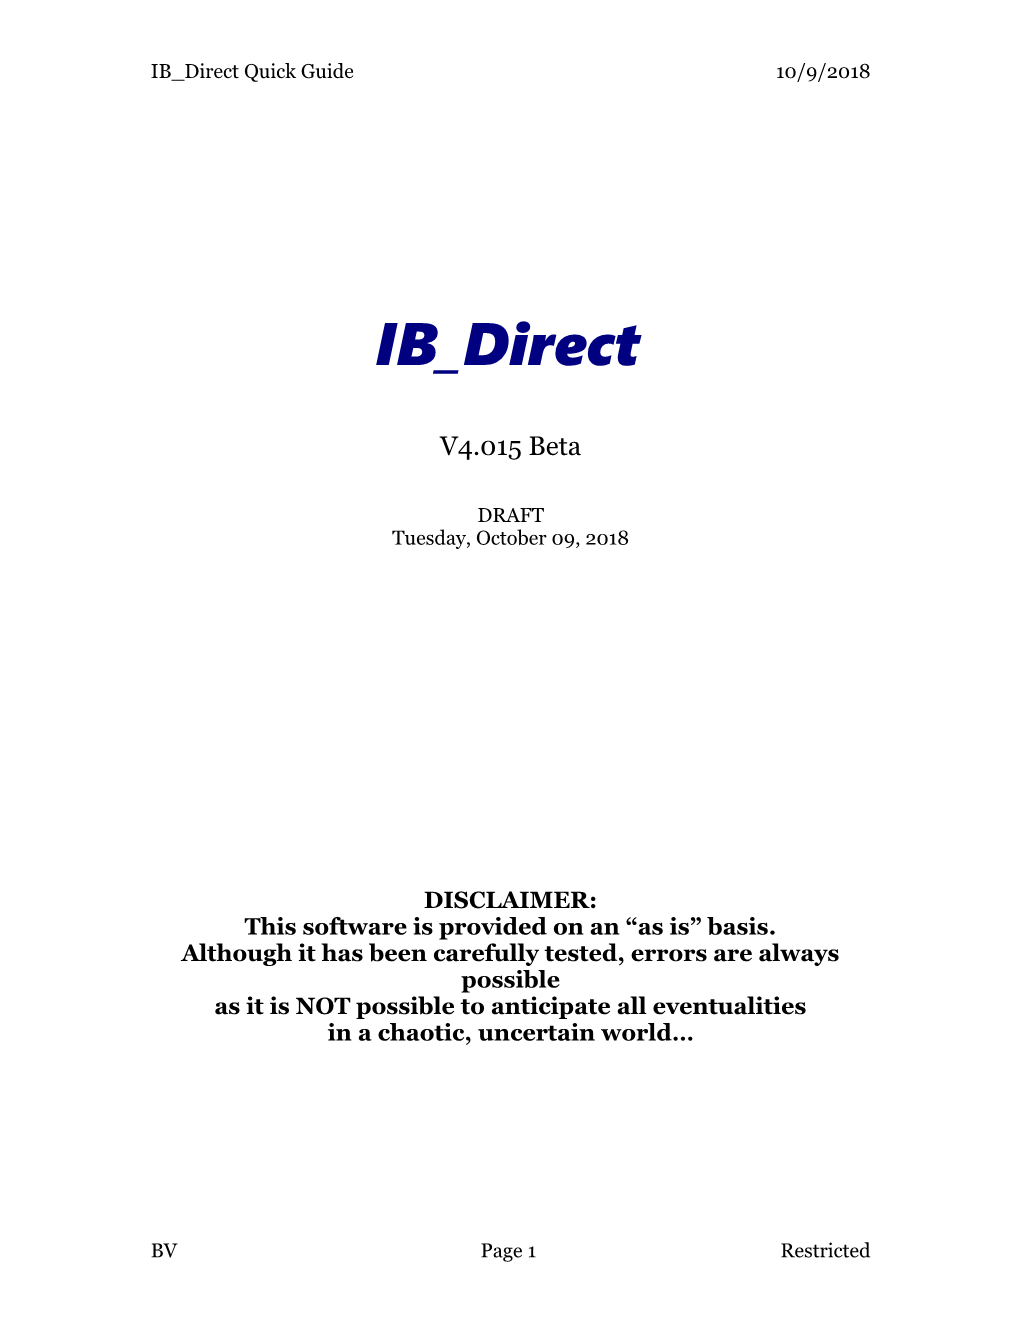 IB Direct Quick Guide10/12/2018